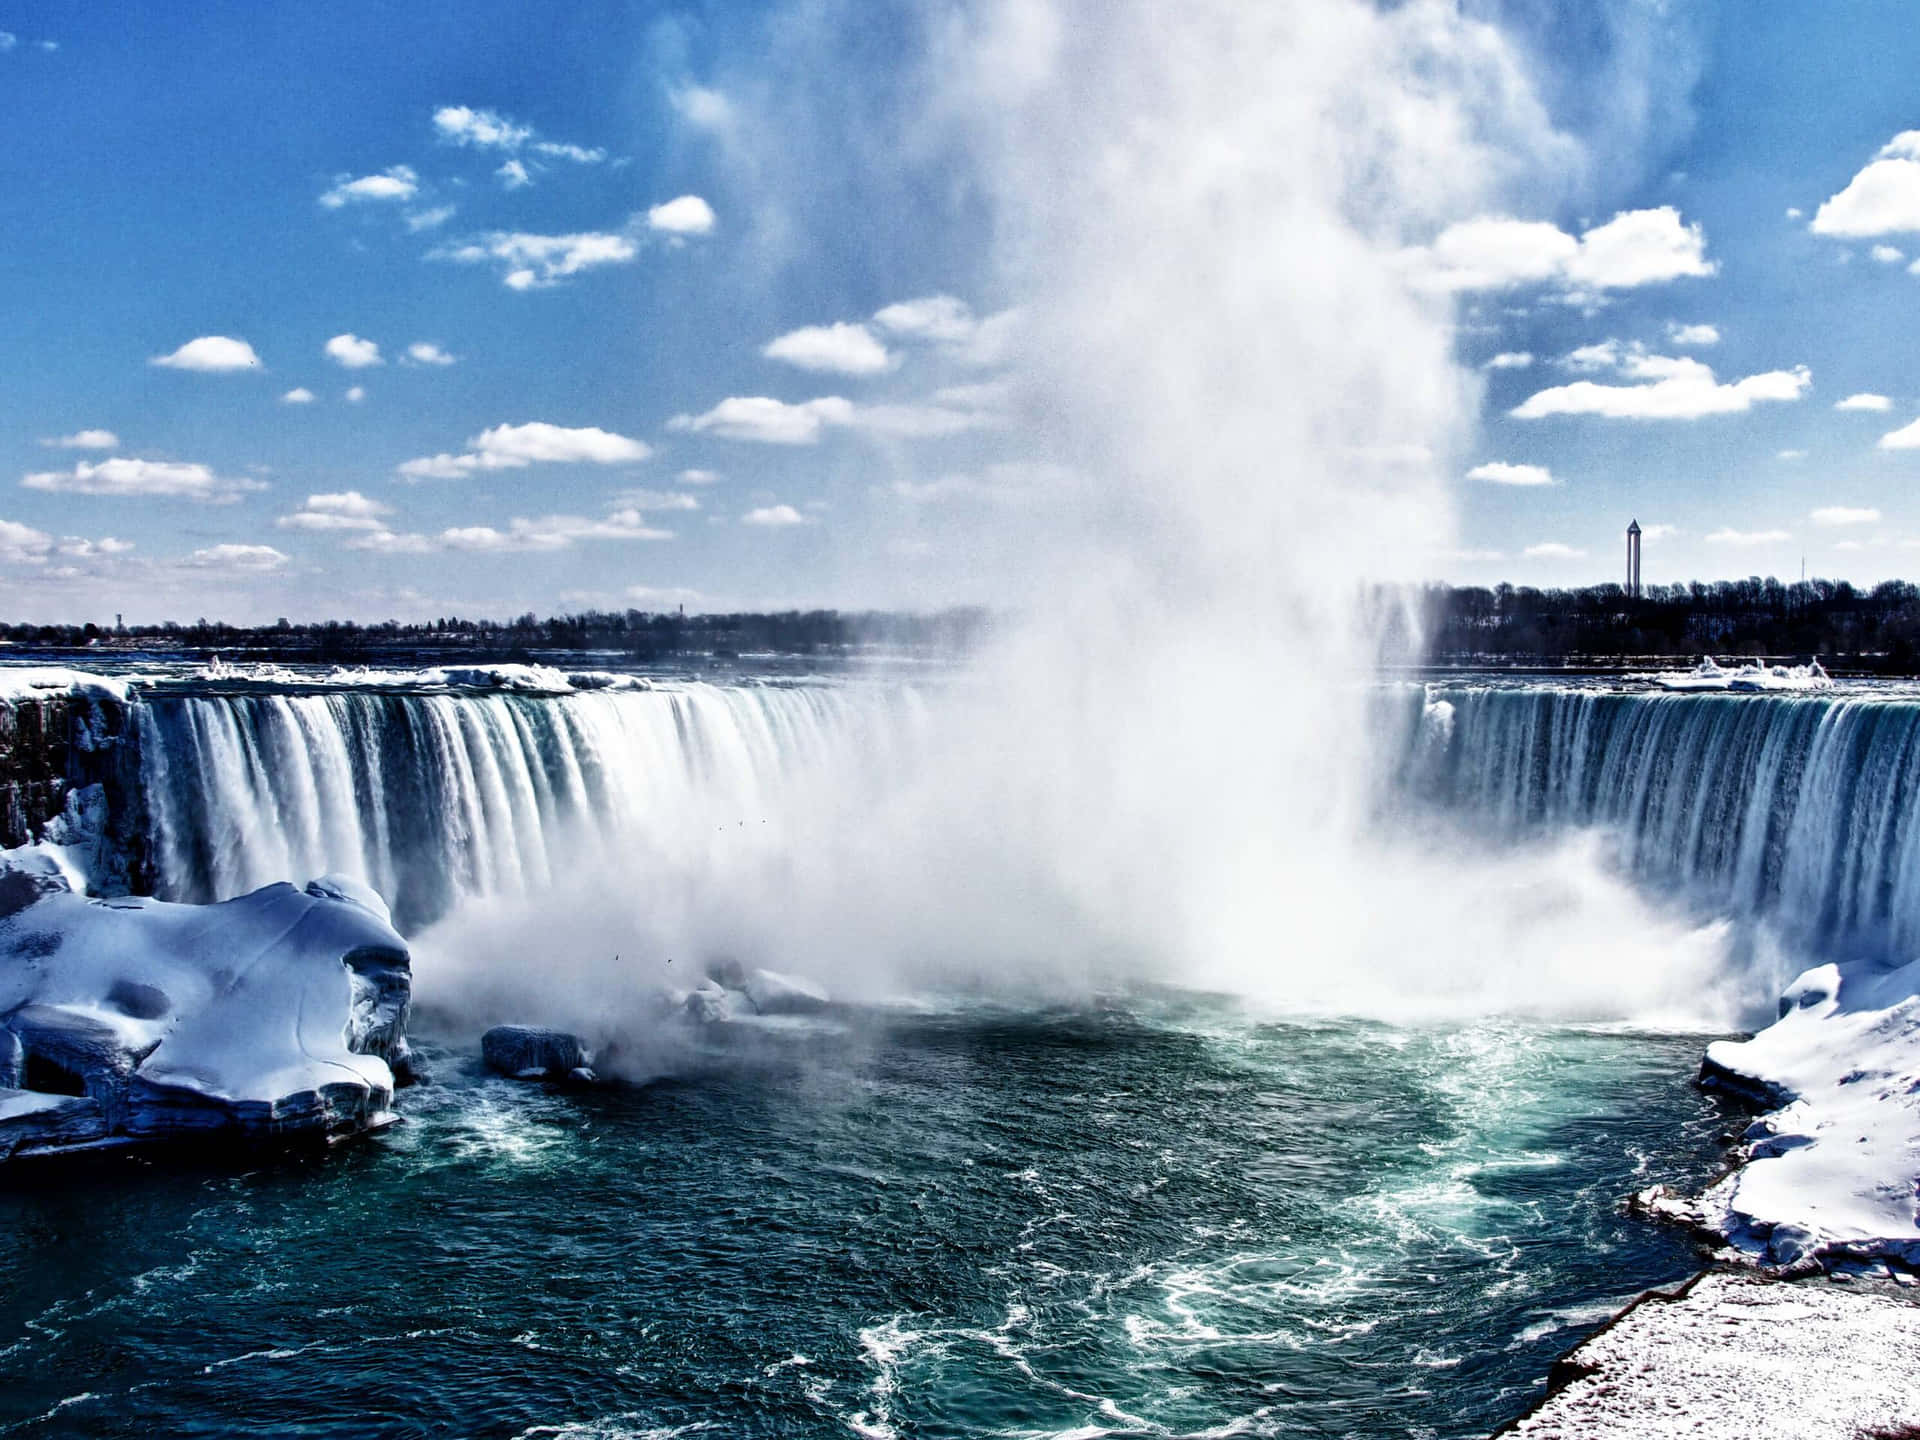 "The Majestic Views of Niagara Falls"